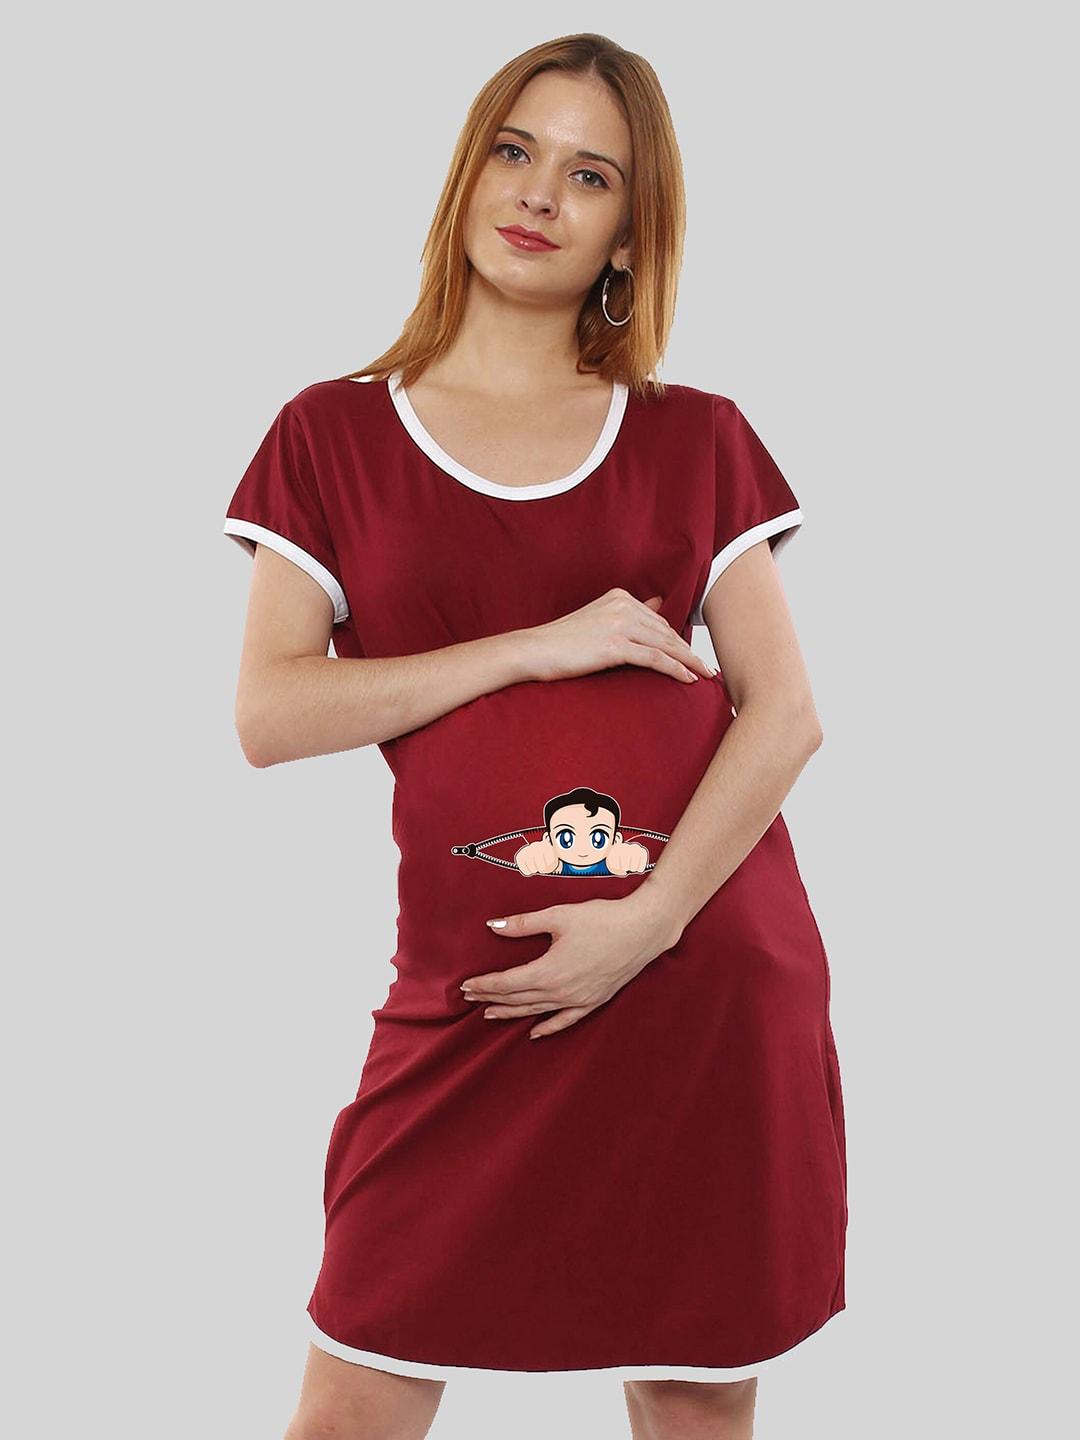 sillyboom graphic printed maternity t-shirt nightdress